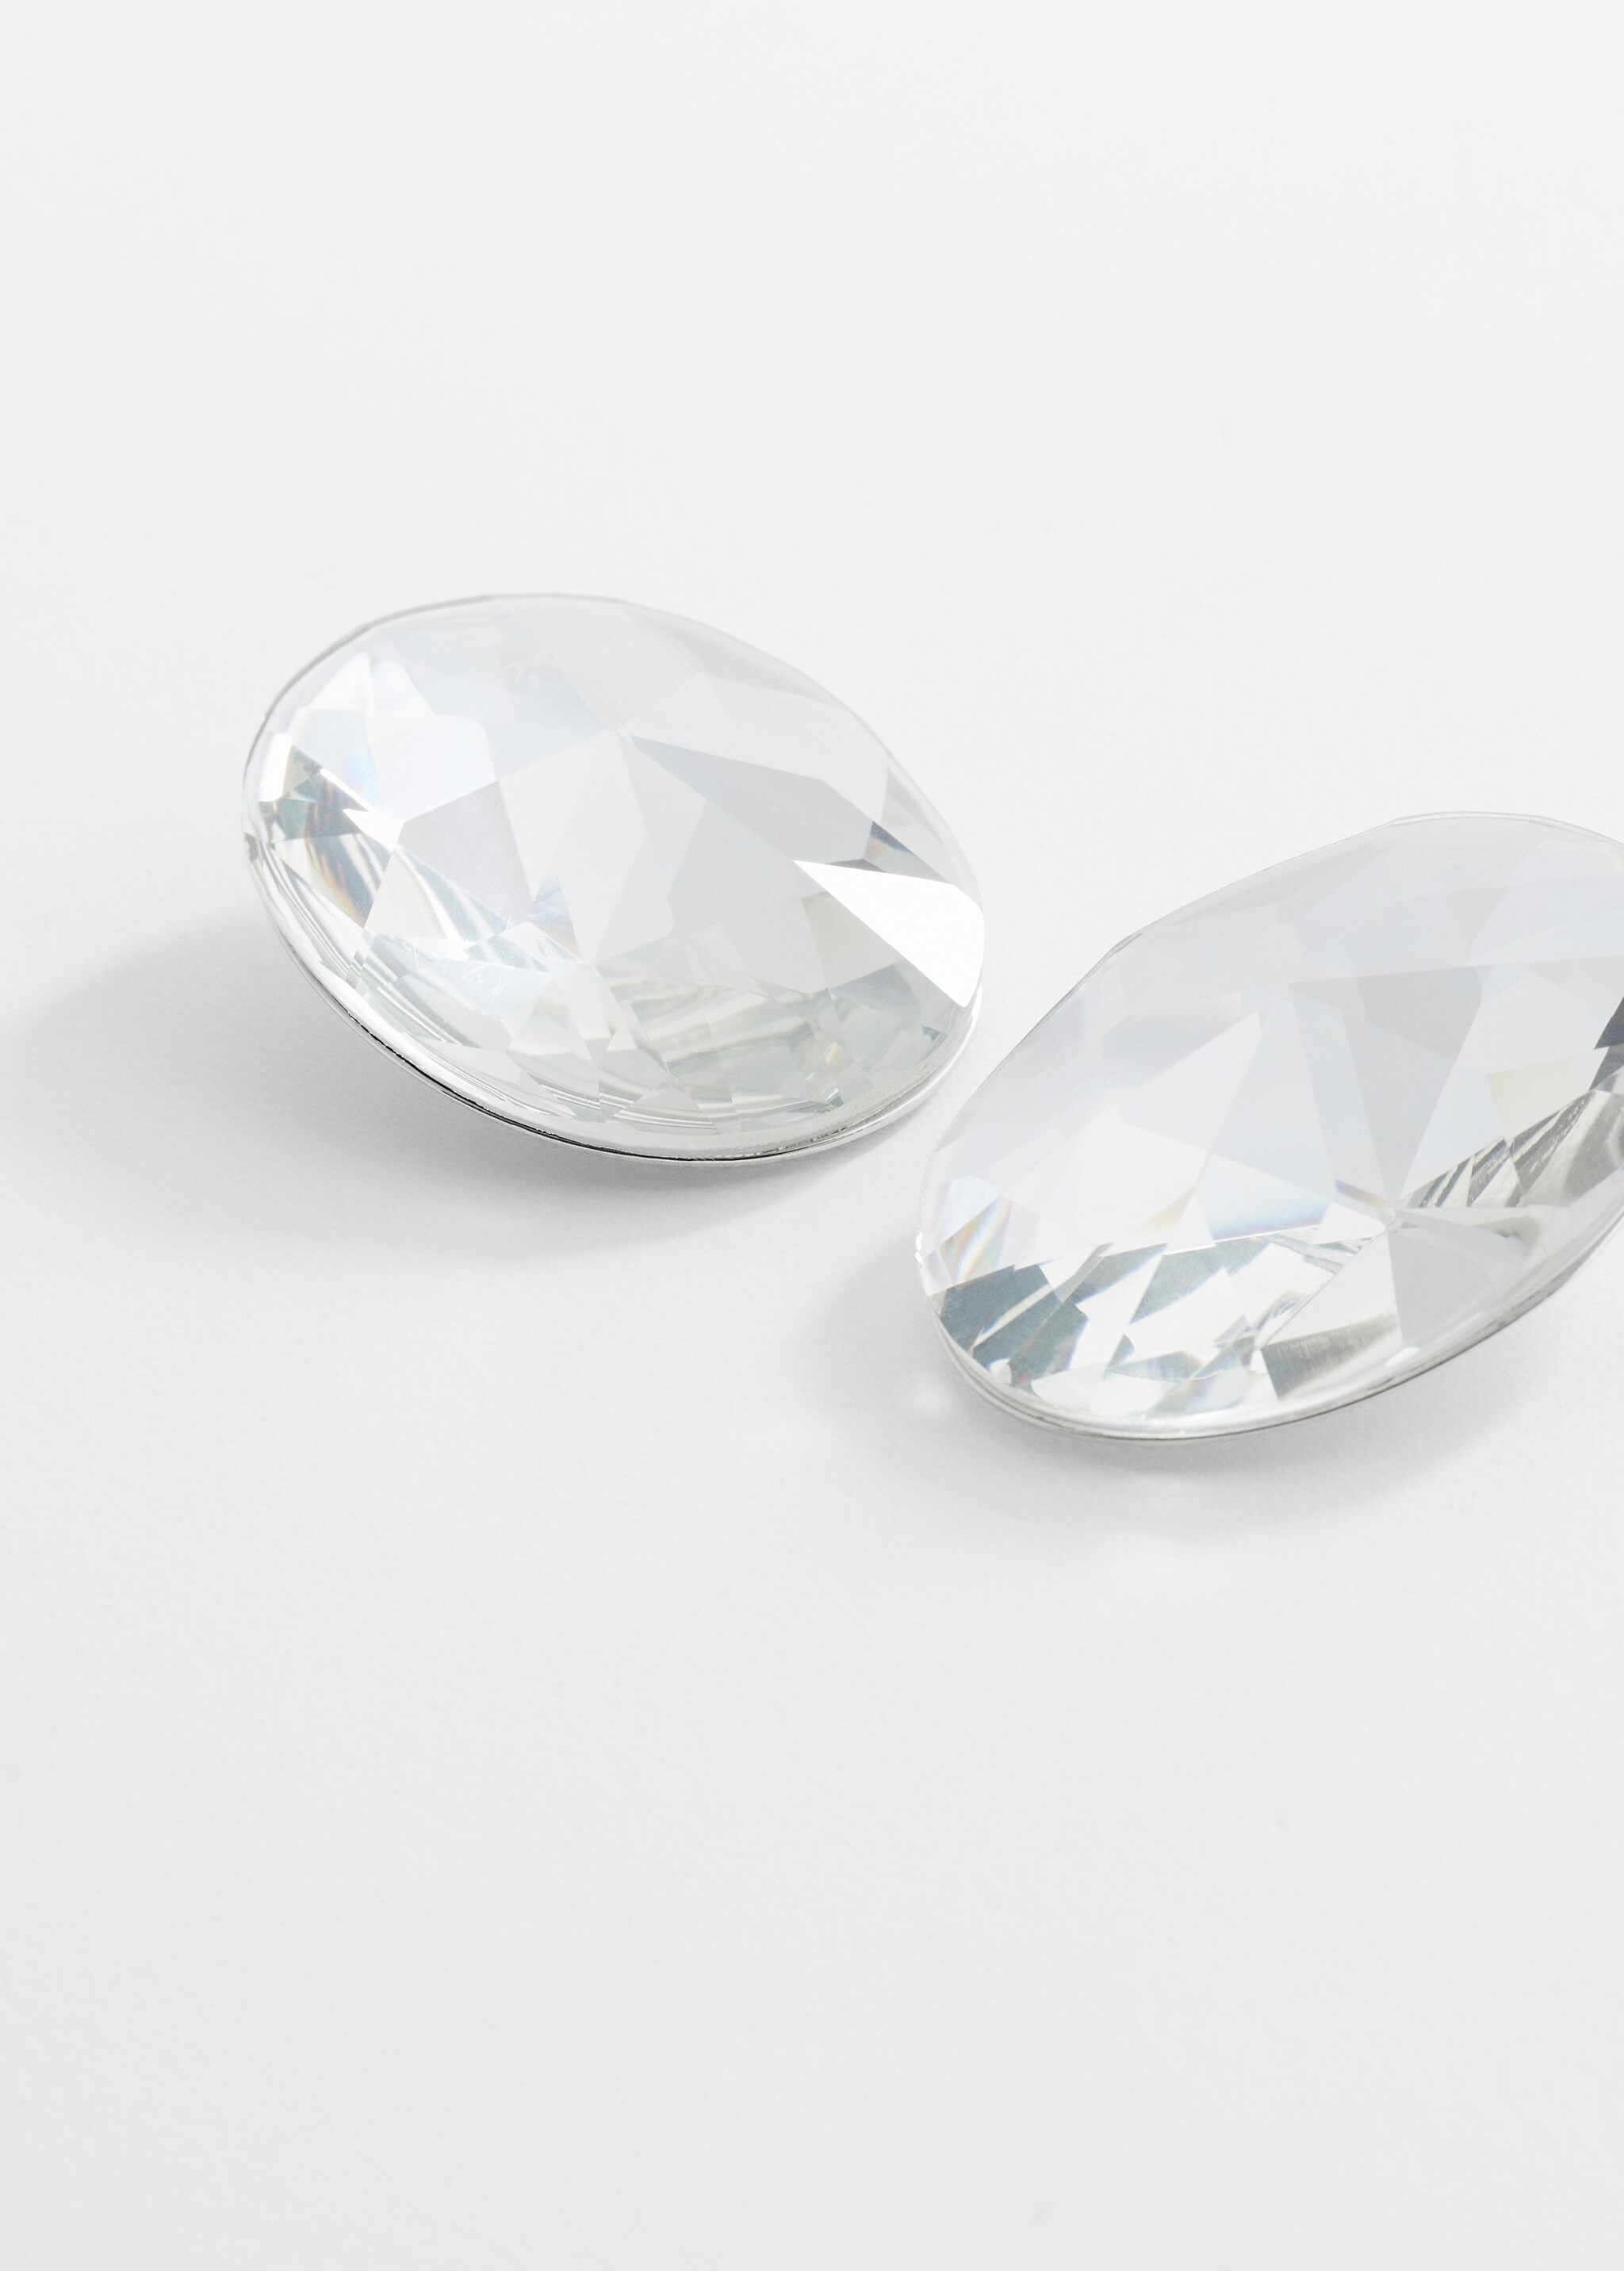 Maxi faceted crystal earrings - Medium plane